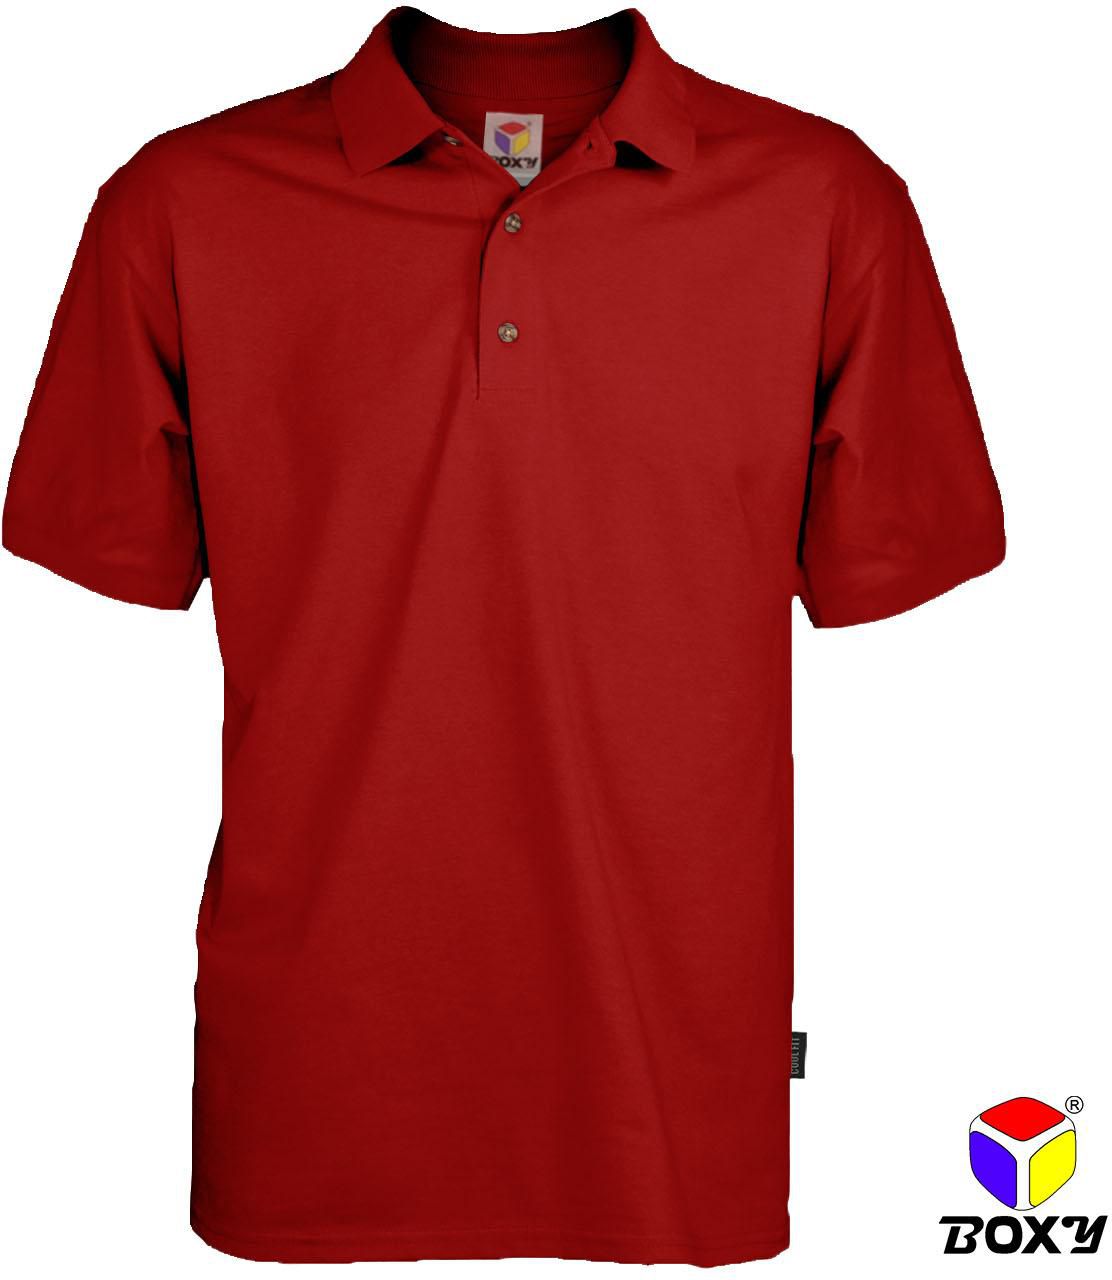 Boxy Microfiber Classic Short Sleeve Polo Shirts - 7 Sizes (Red)